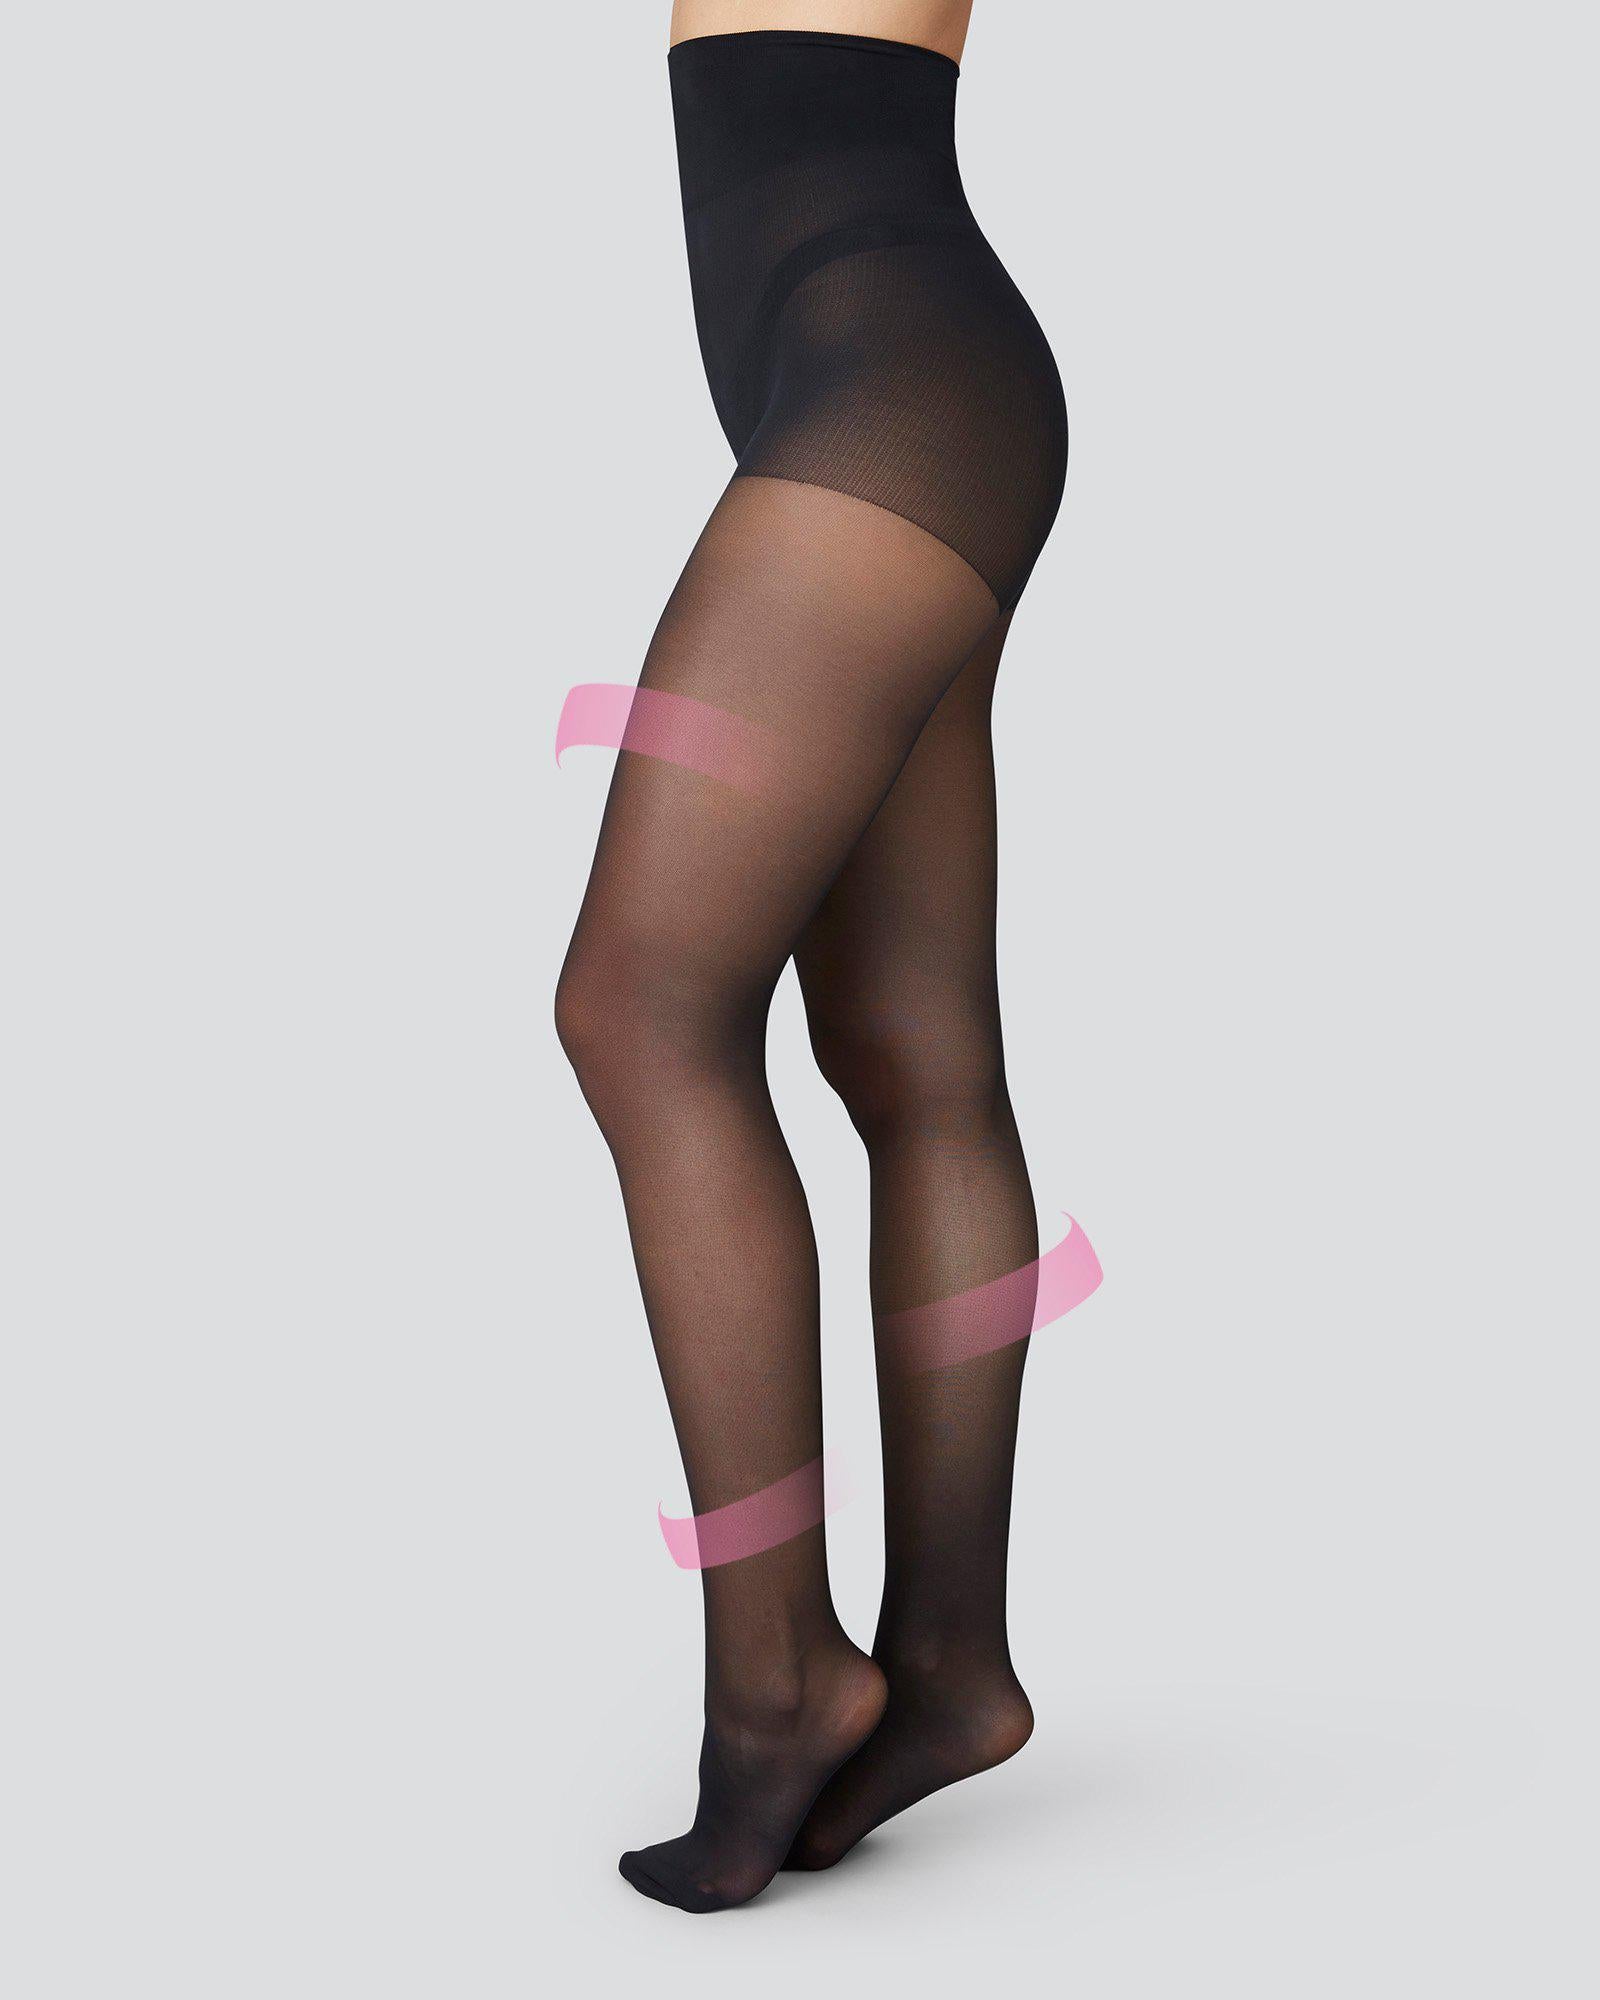 Pantyhose: Sheer Stockings & Hosiery